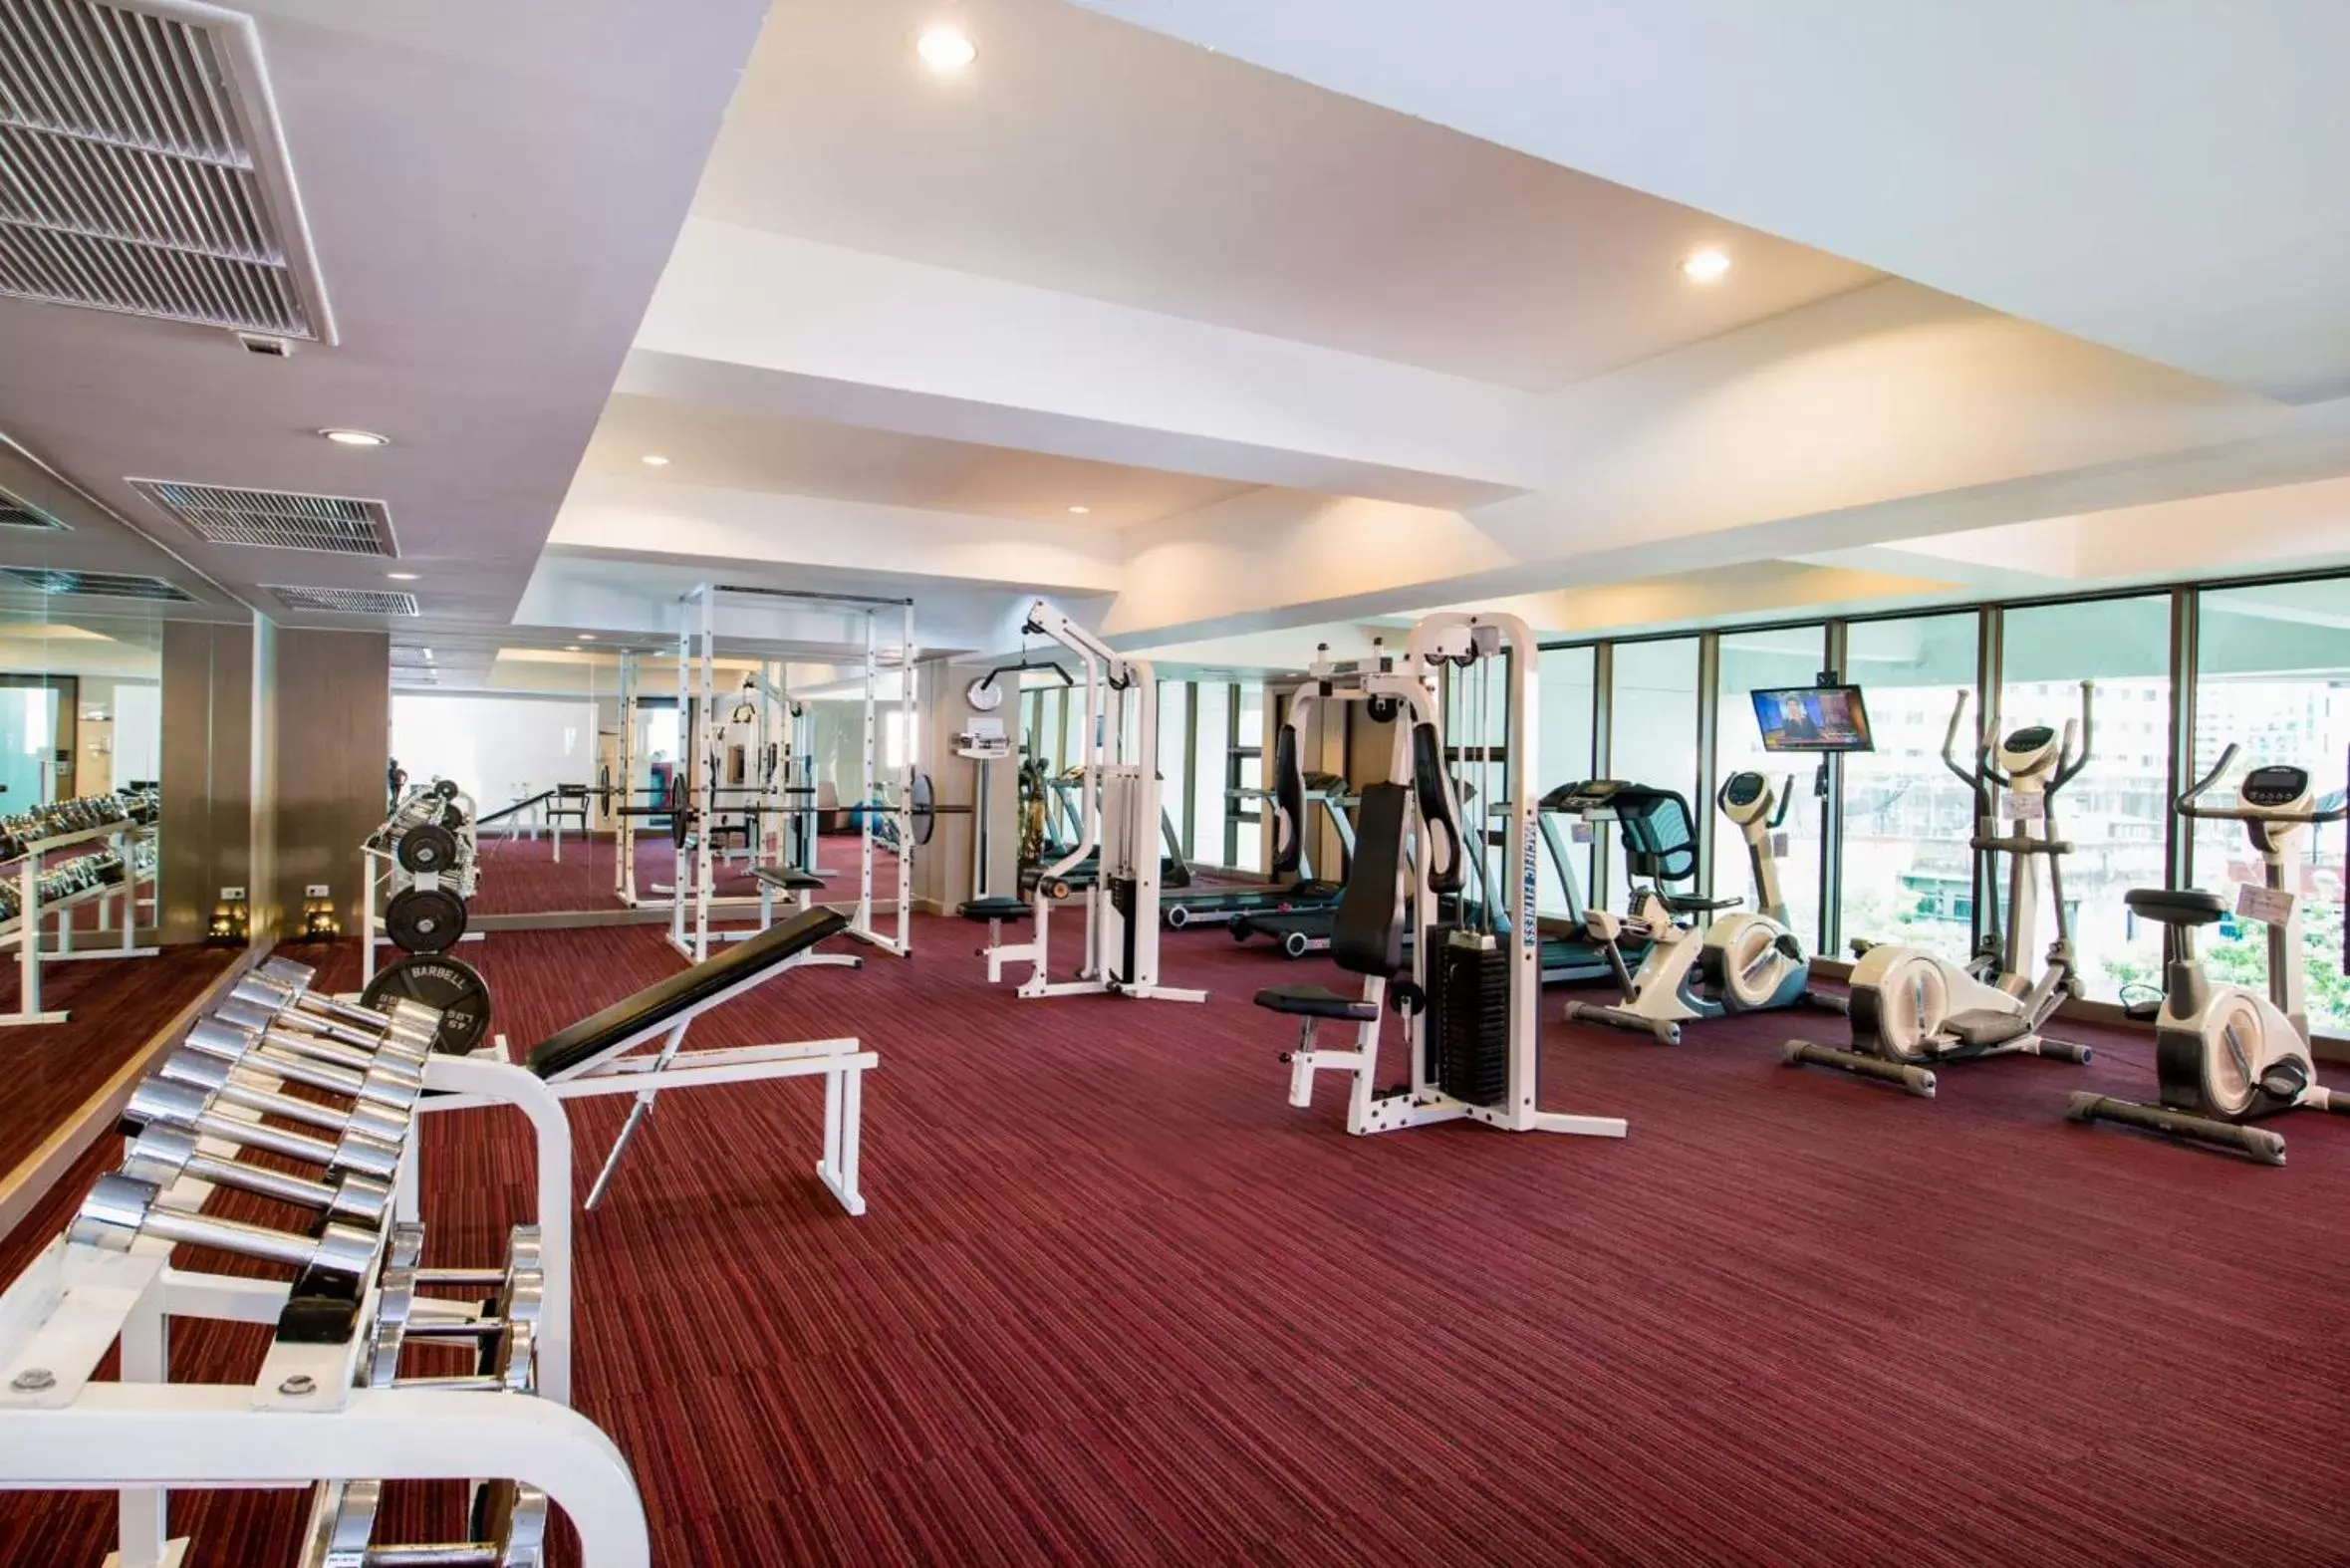 Fitness centre/facilities, Fitness Center/Facilities in Furama Silom Hotel